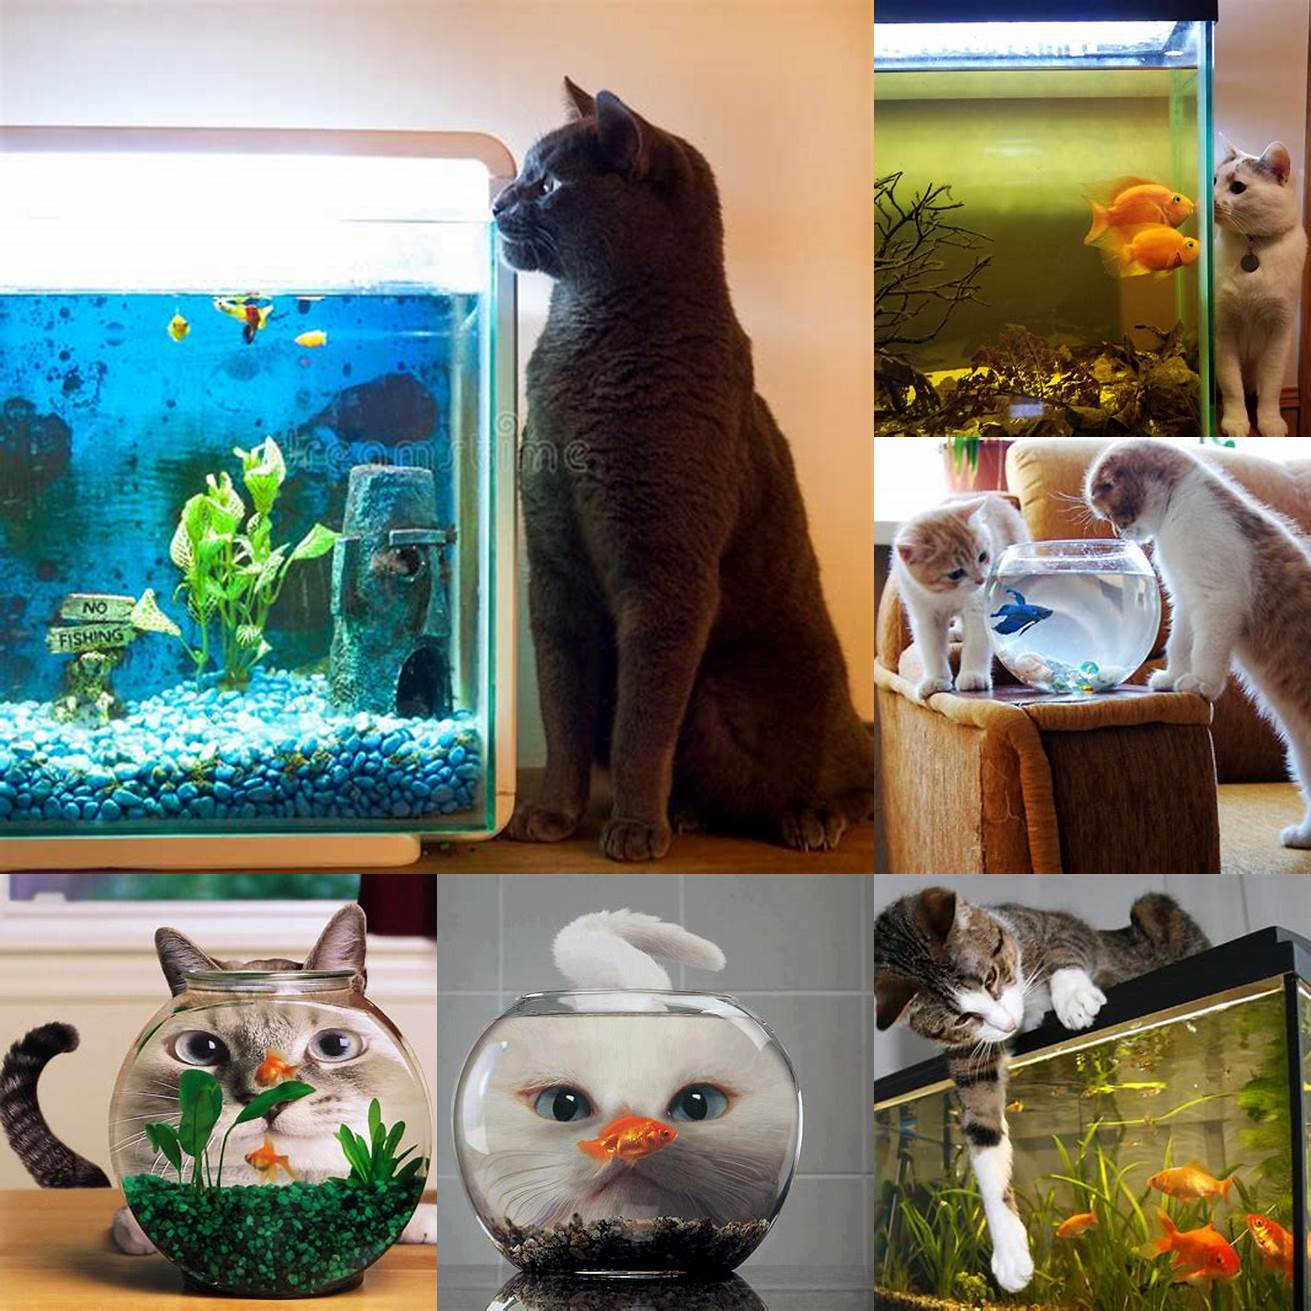 The cat staring at the fish tank